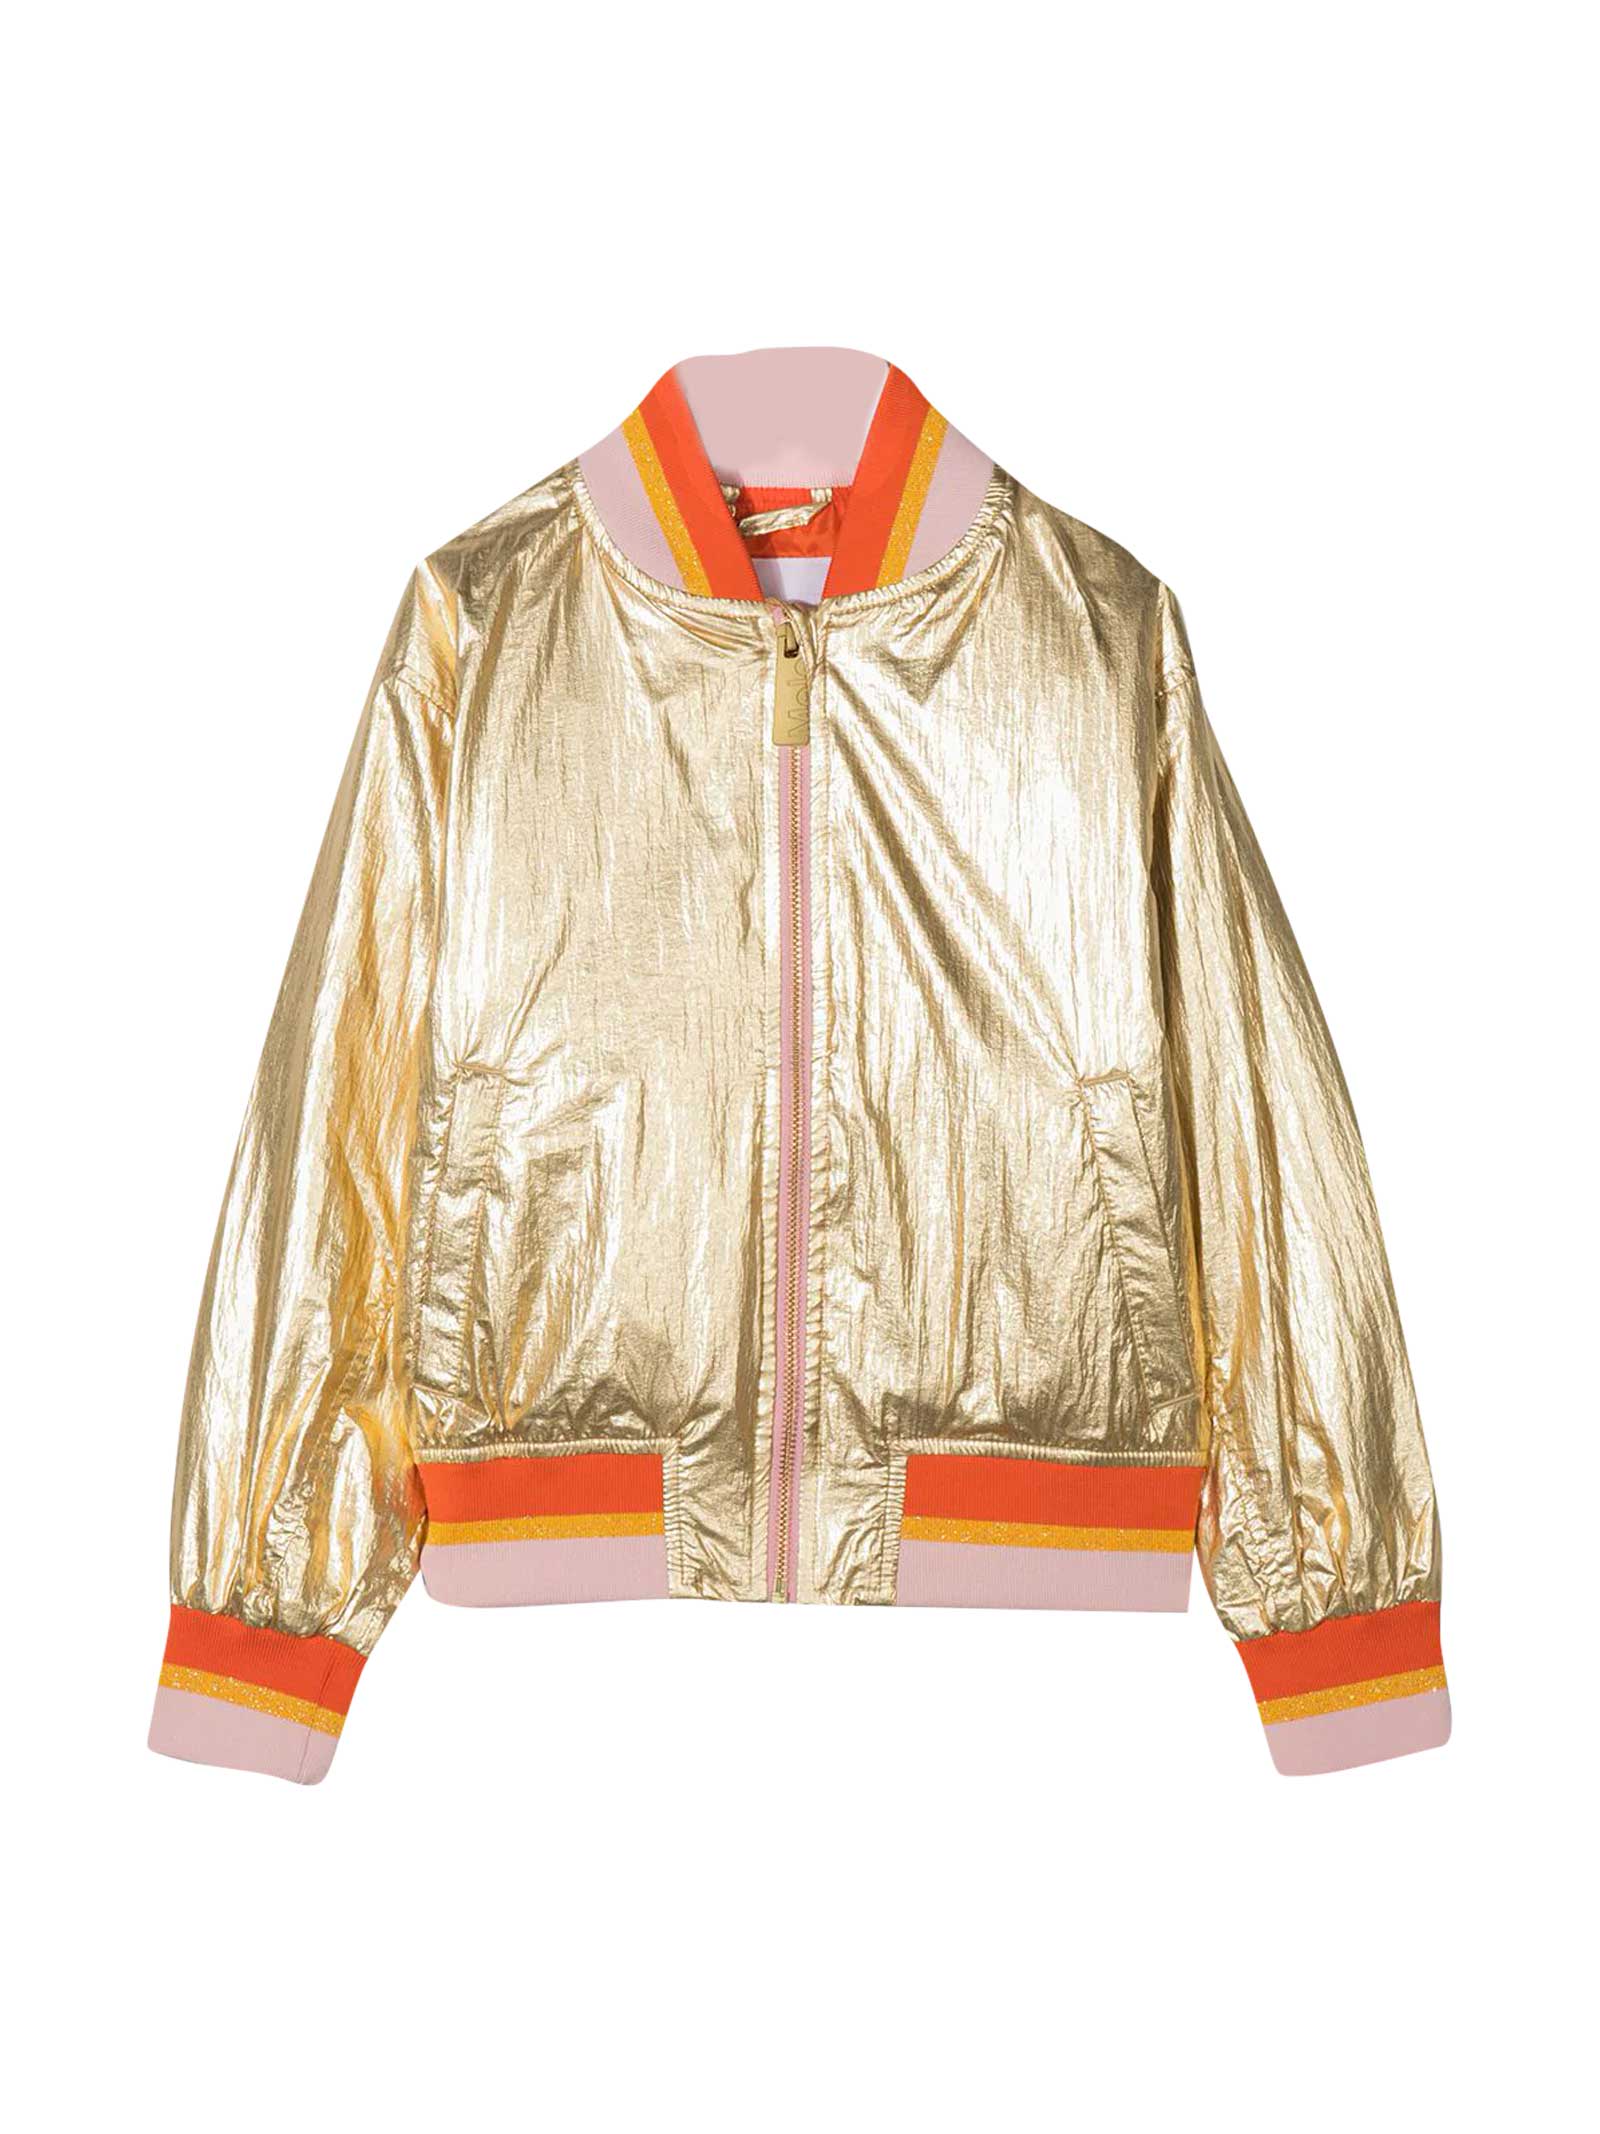 Molo Gold Jacket With Orange Details